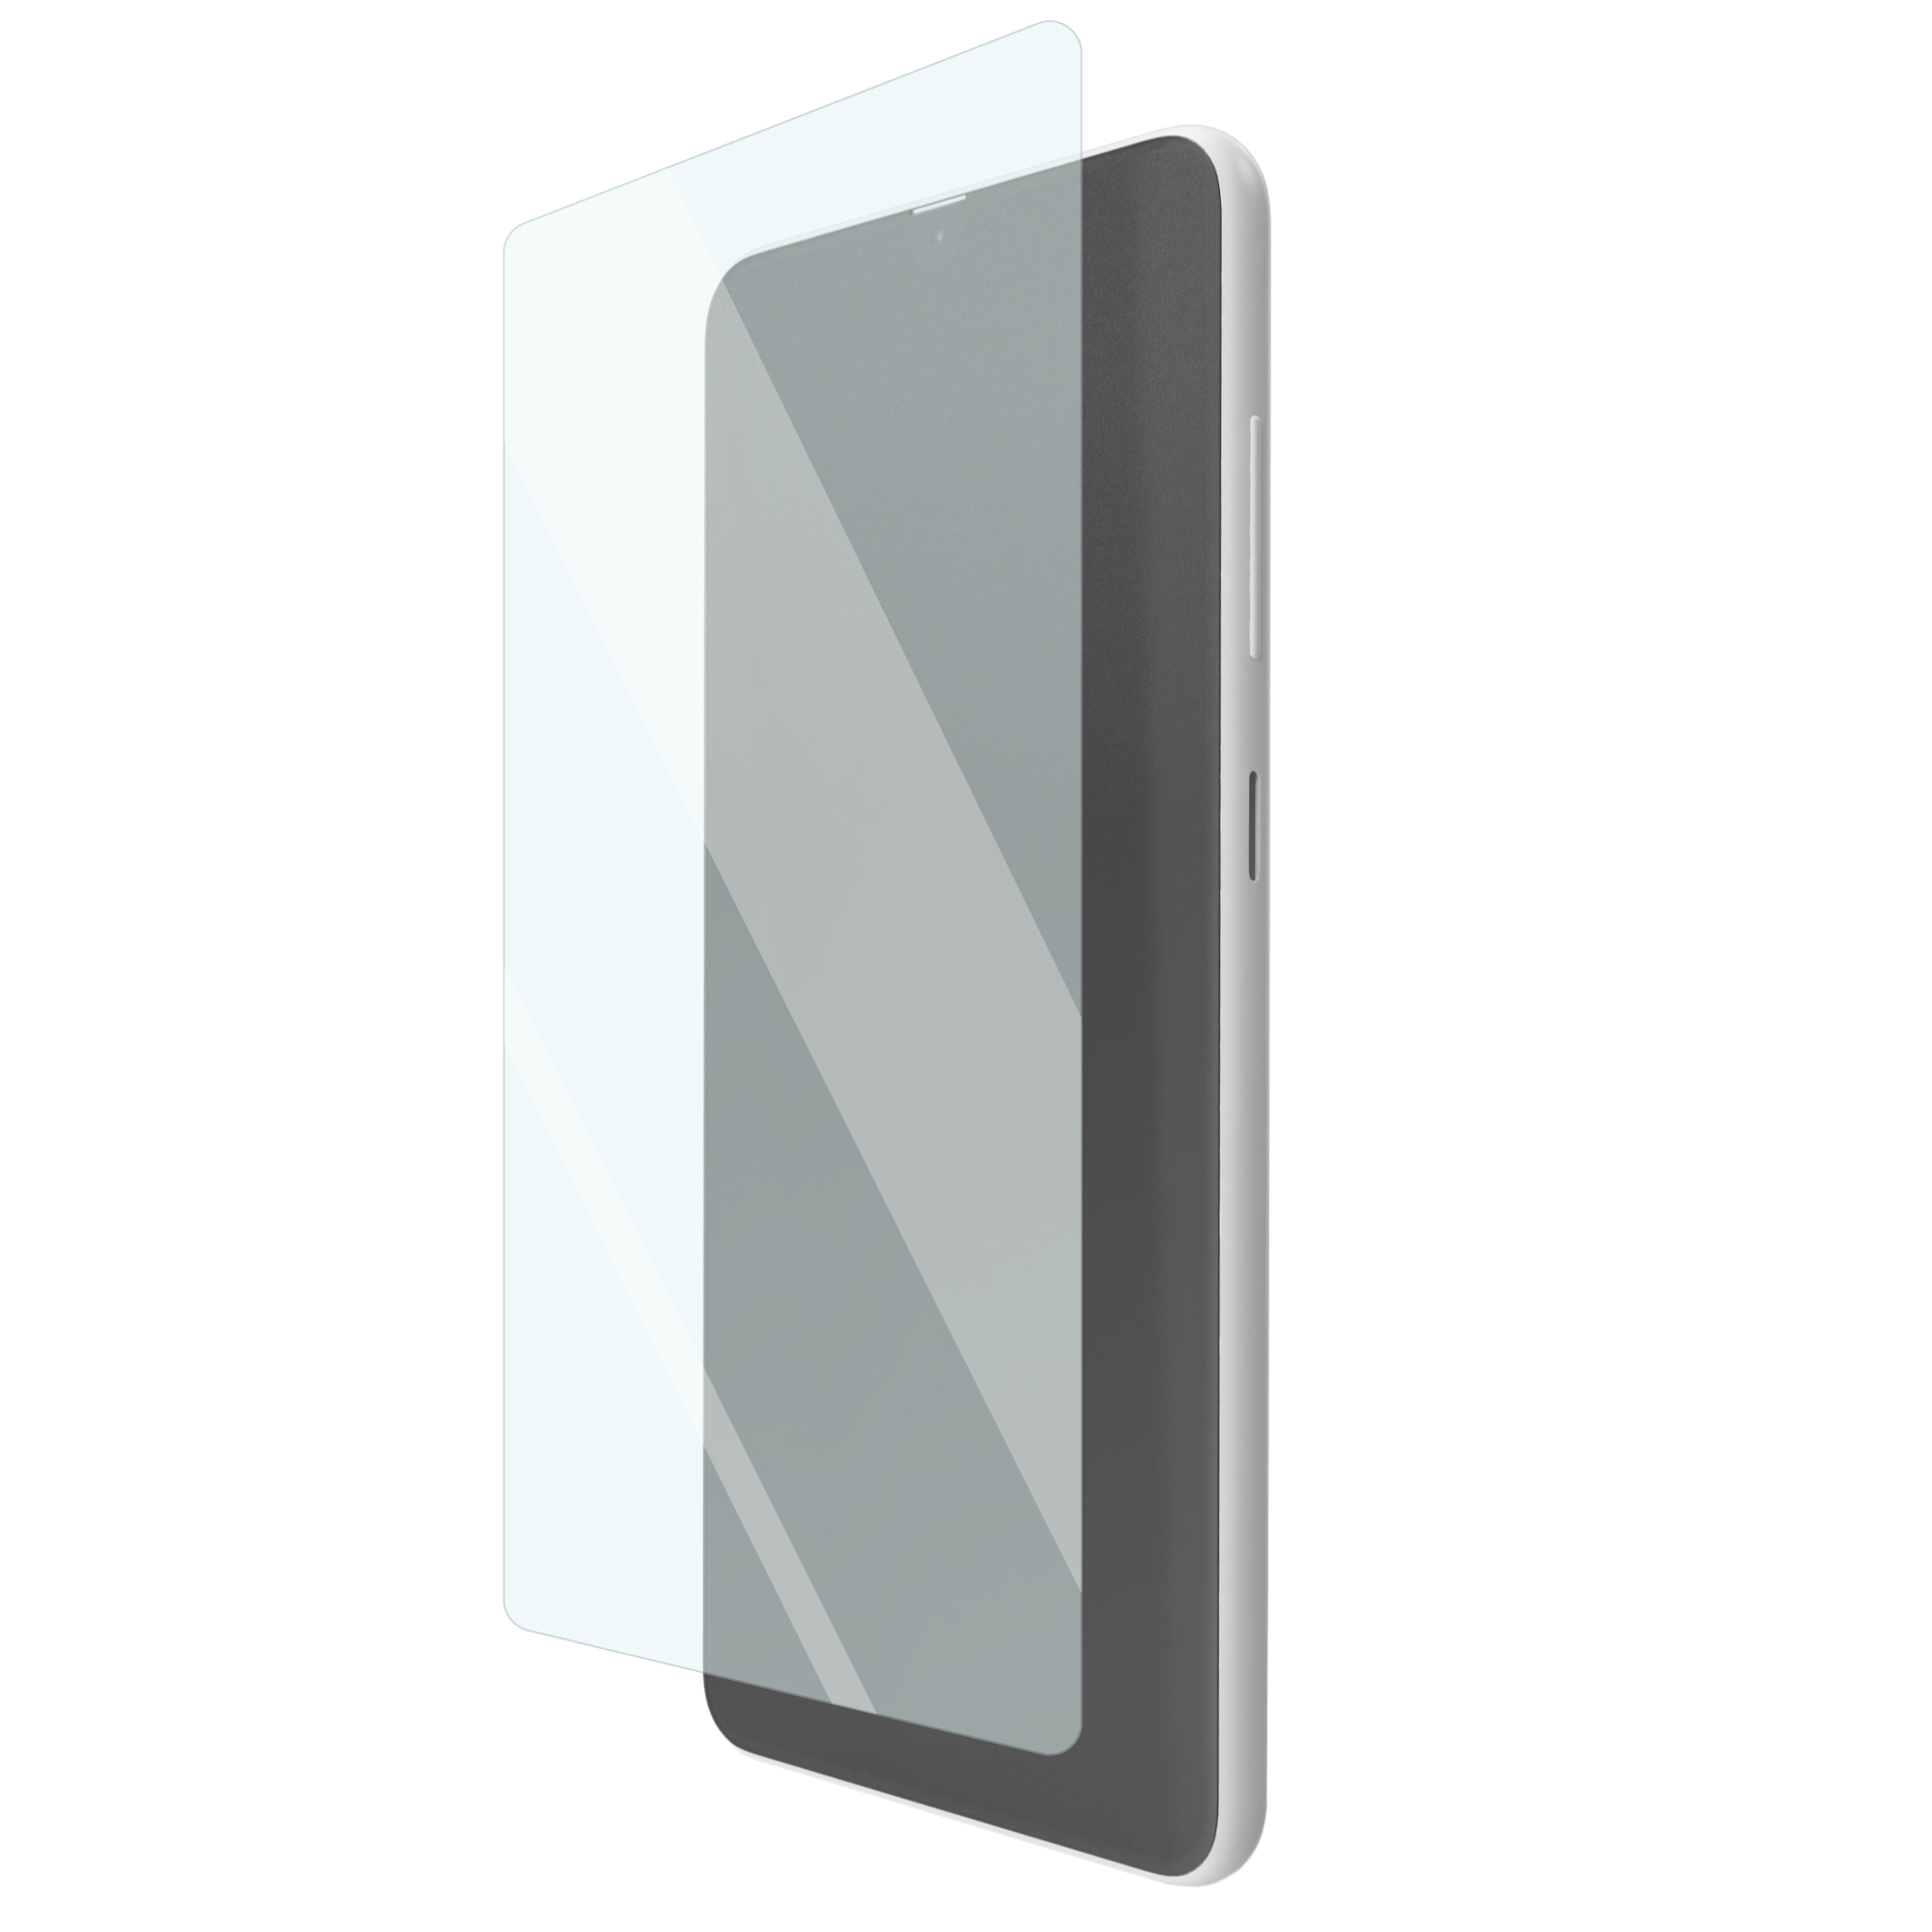 Folie de protectie silicon ShieldUP HiTech Regenerable pentru Apple iPhone XS thumb